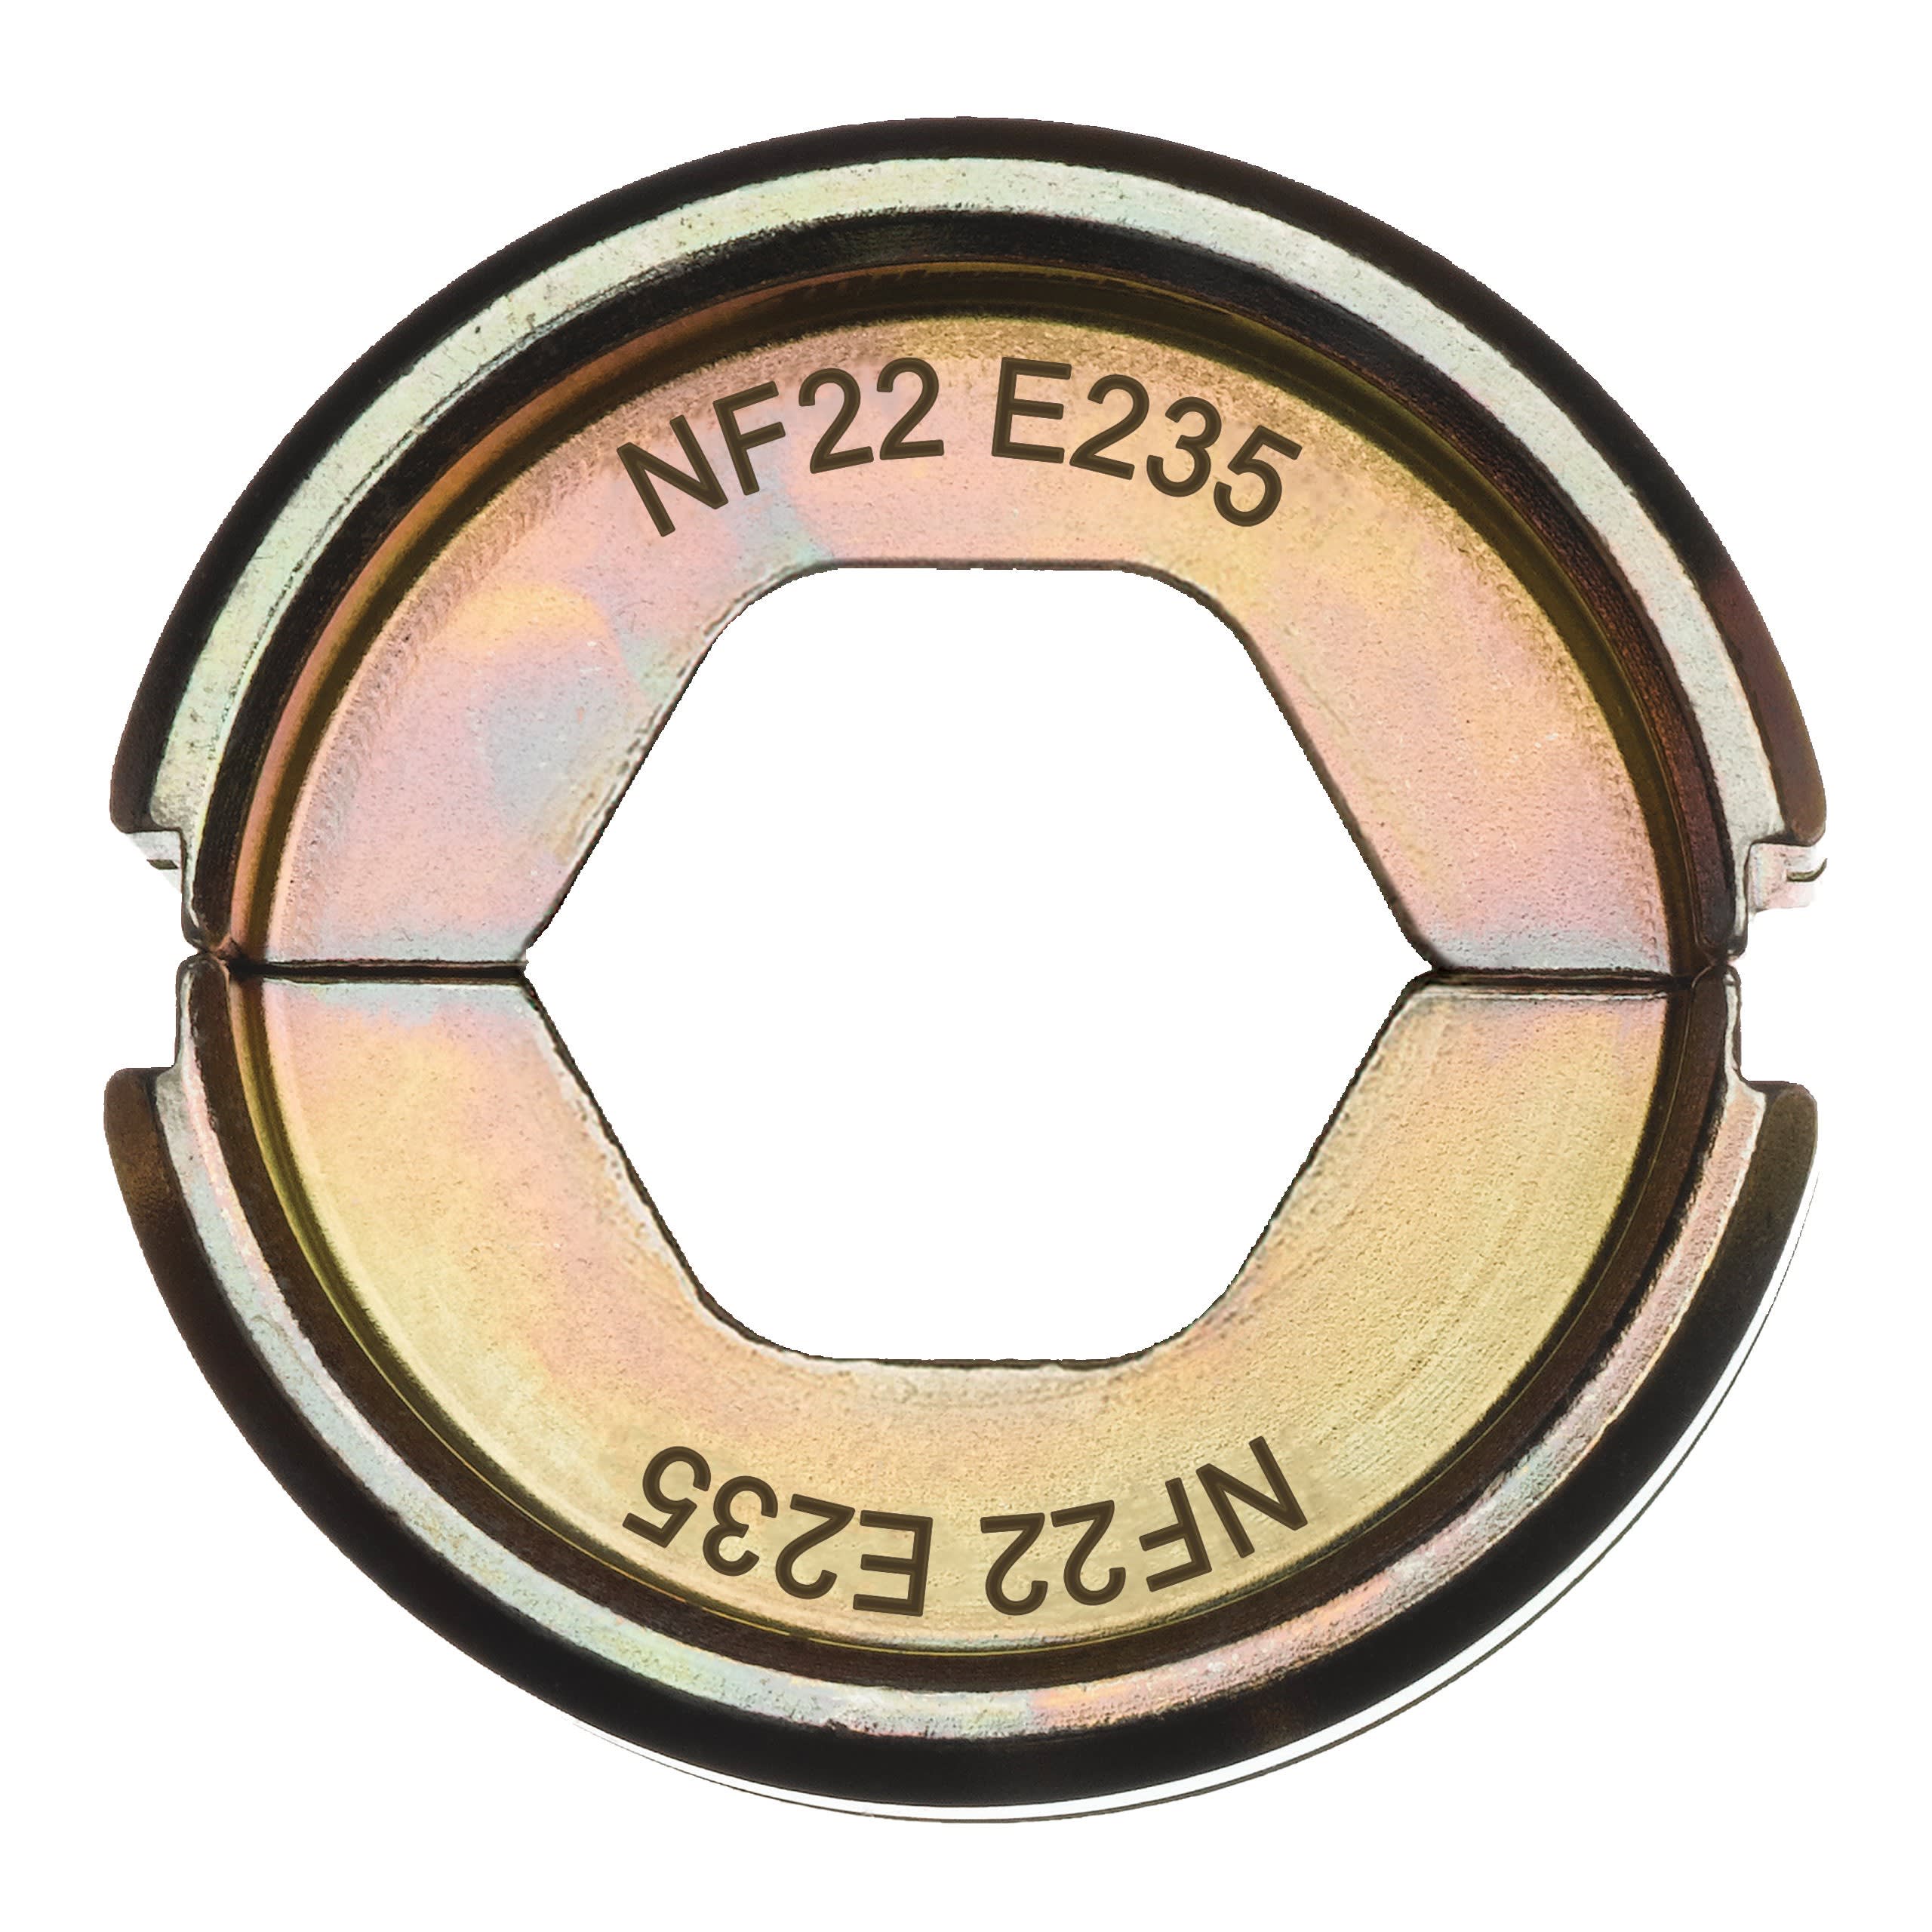 MILWAUKEE - MATRICE POUR SERTISSEUSE FORCE LOGIC (ELECTRICITE) NF22 E235